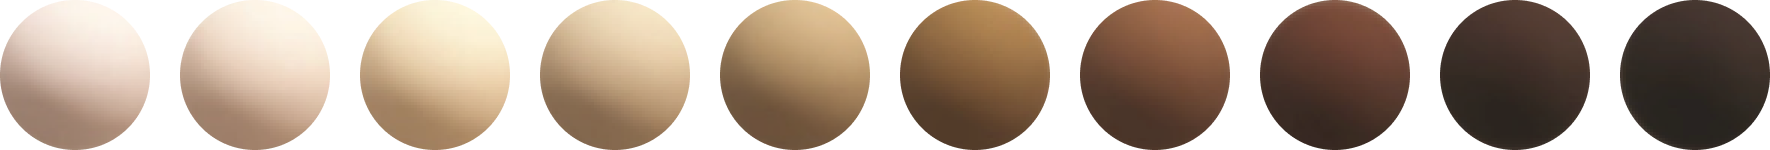 Ten circles representing different skin tones